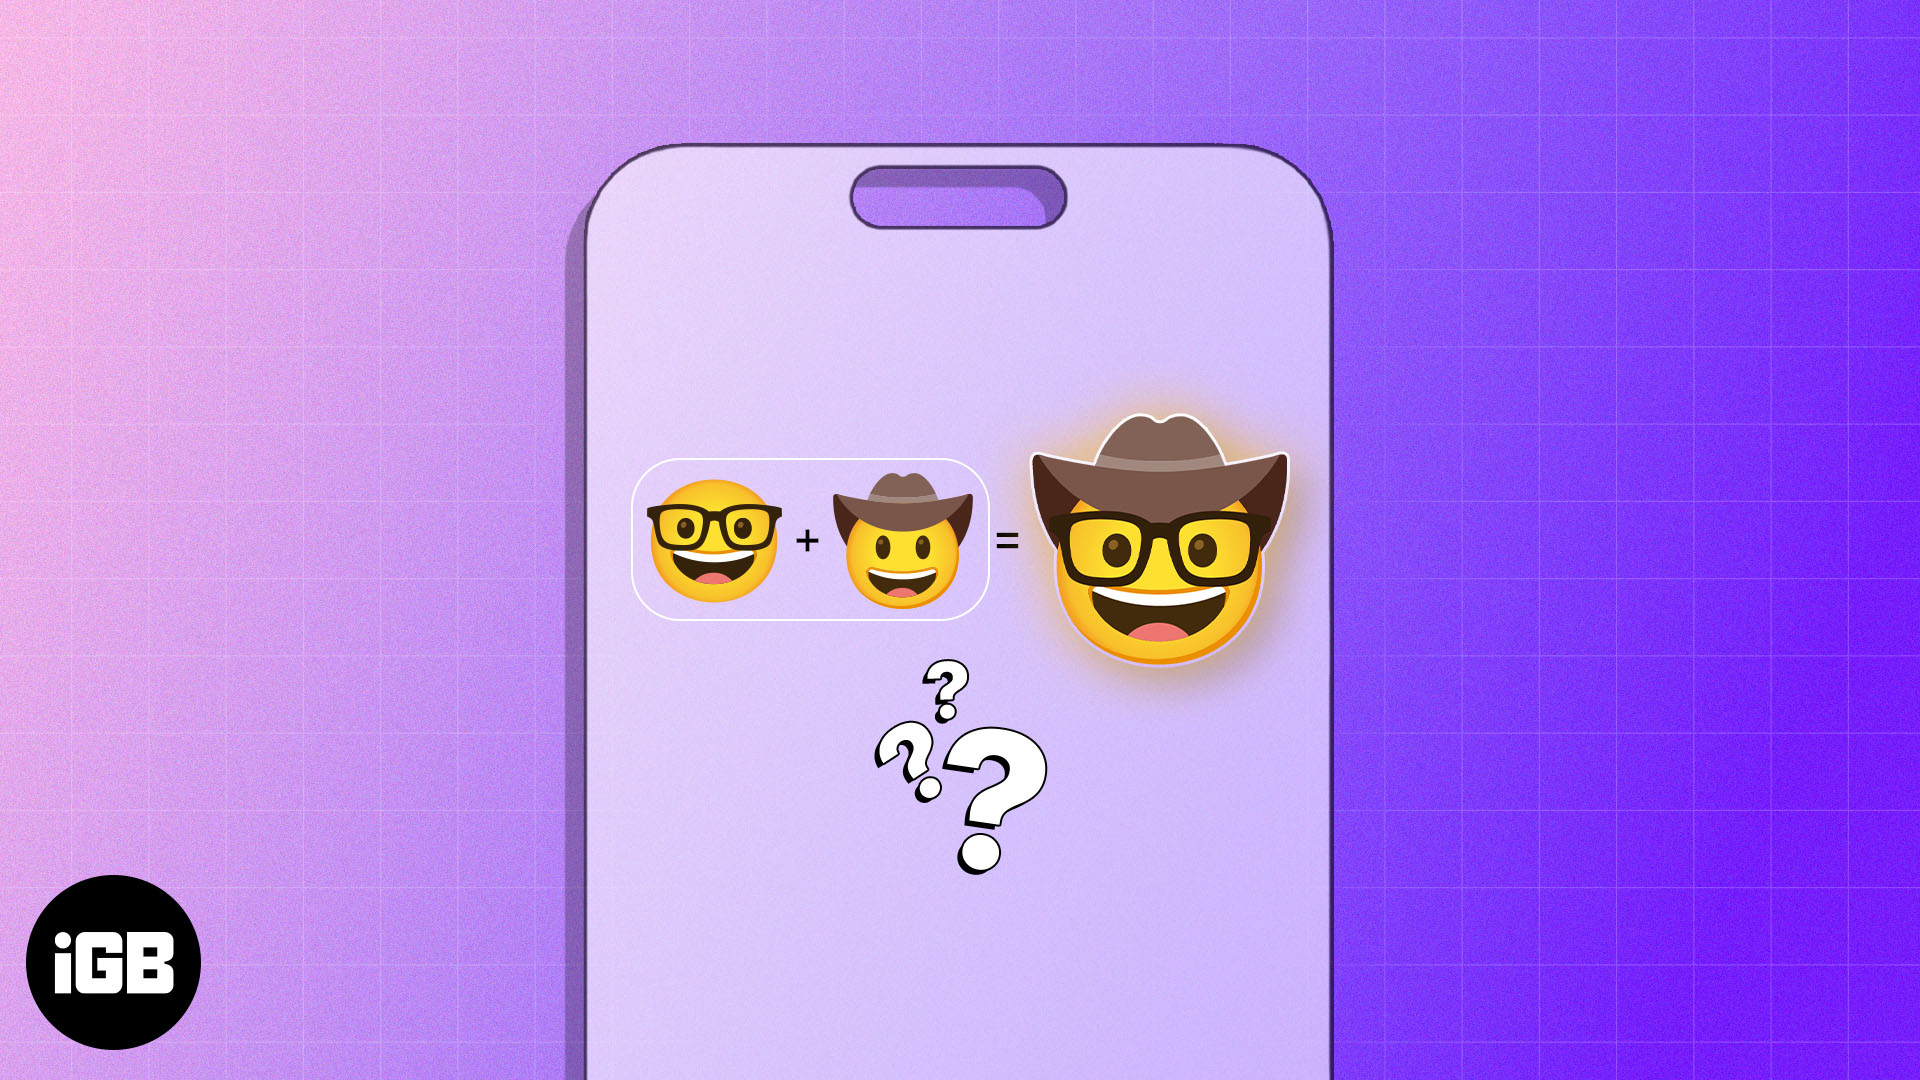 How to combine emojis on iPhone